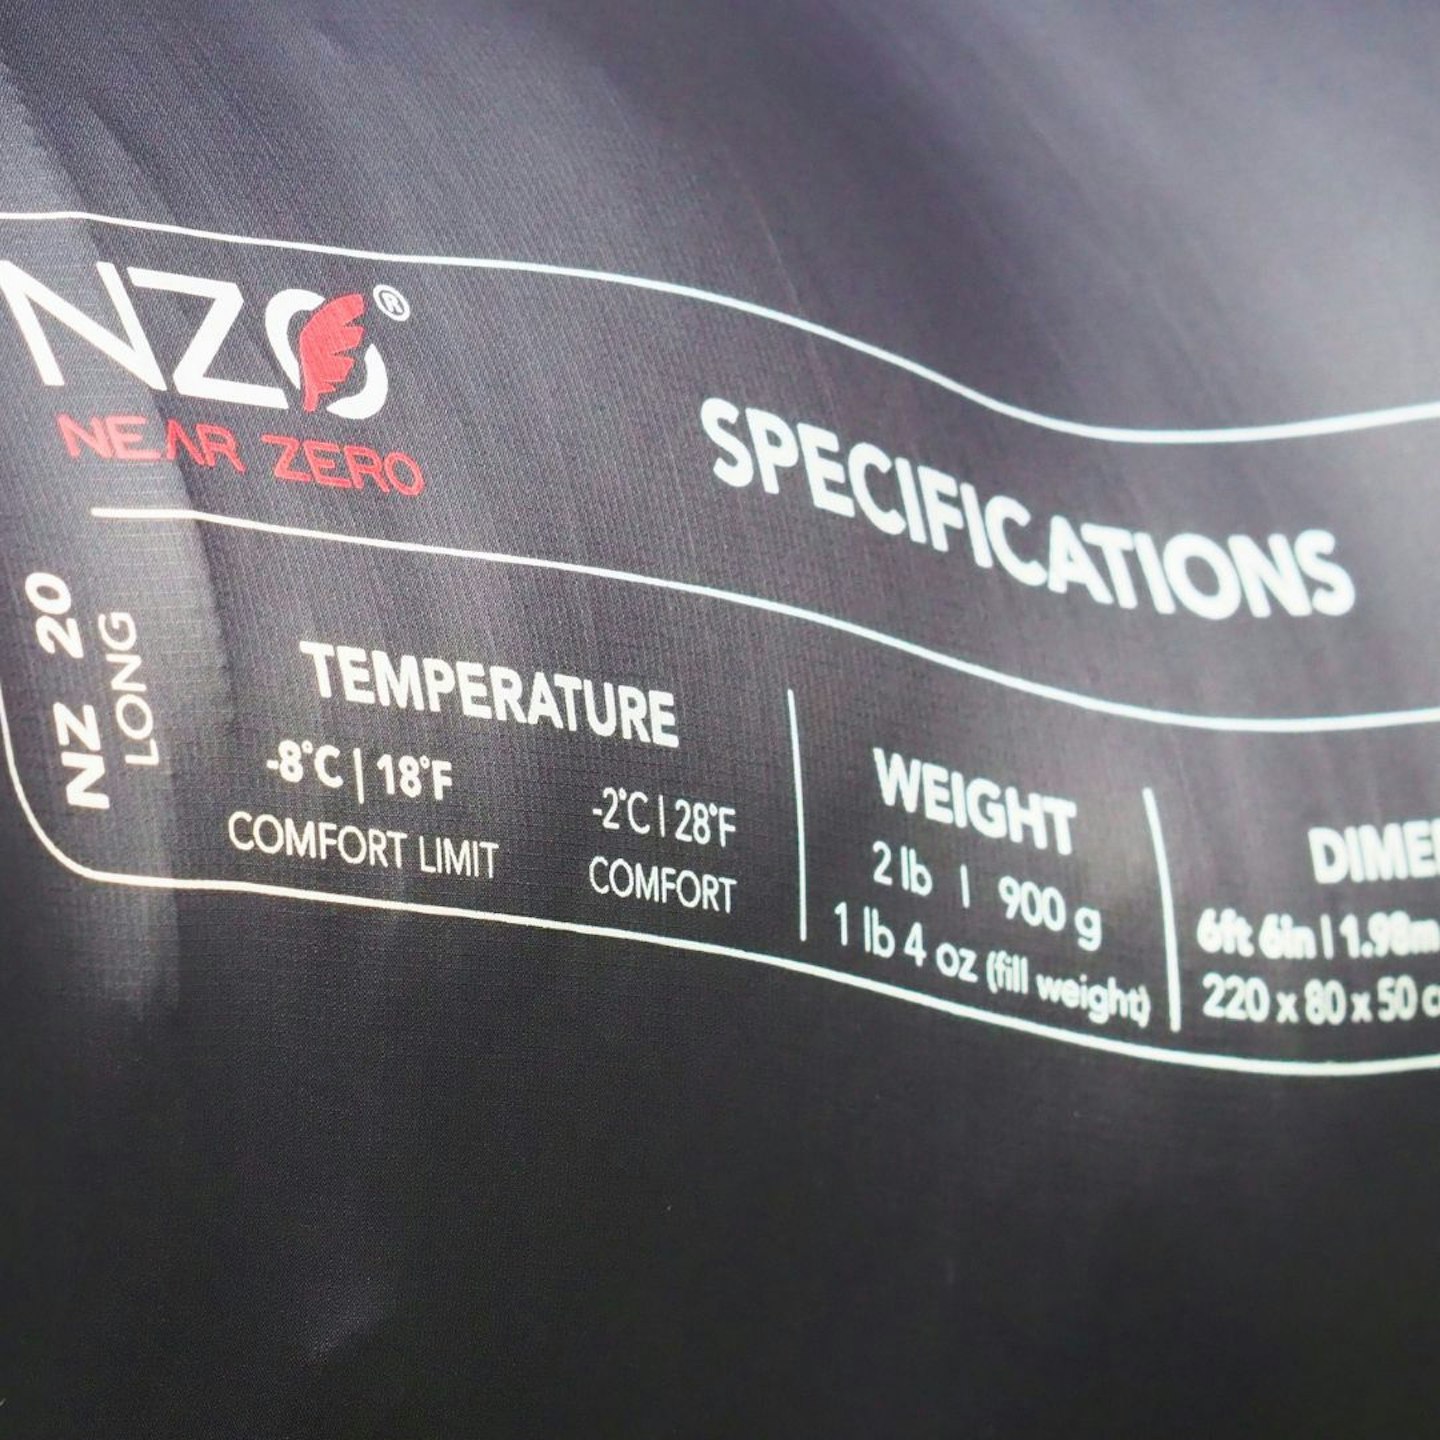 Near Zero NZ20 closeup of specs on stuff sack